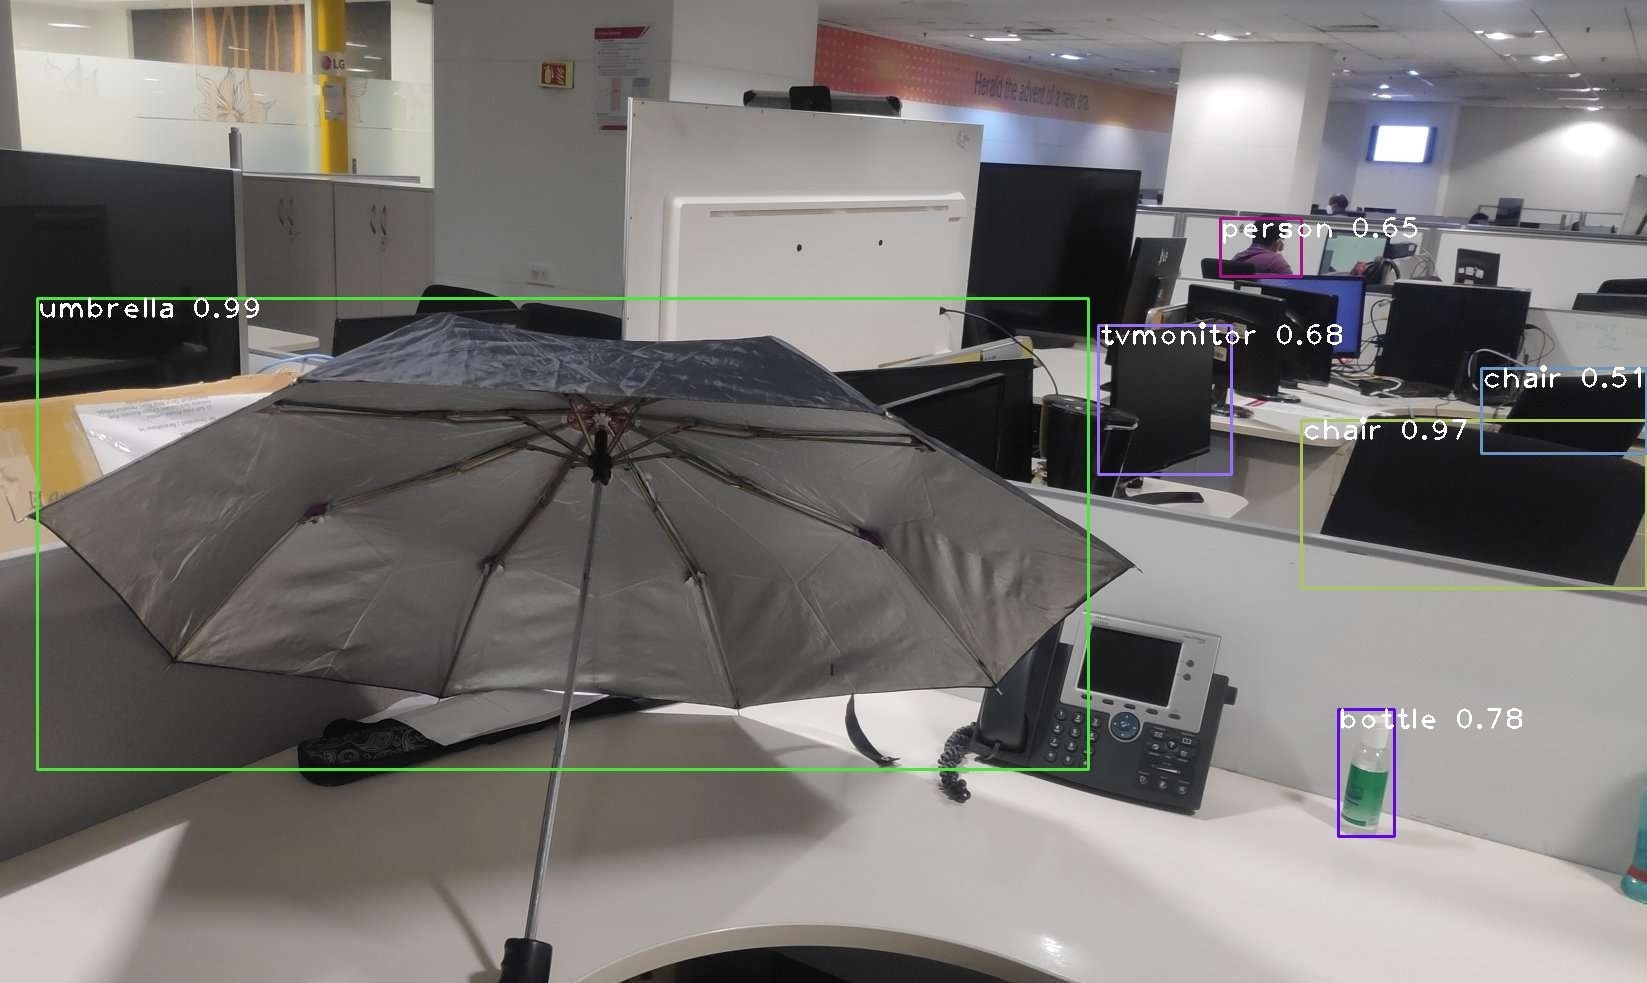 Demo scenario detecting an umbrella